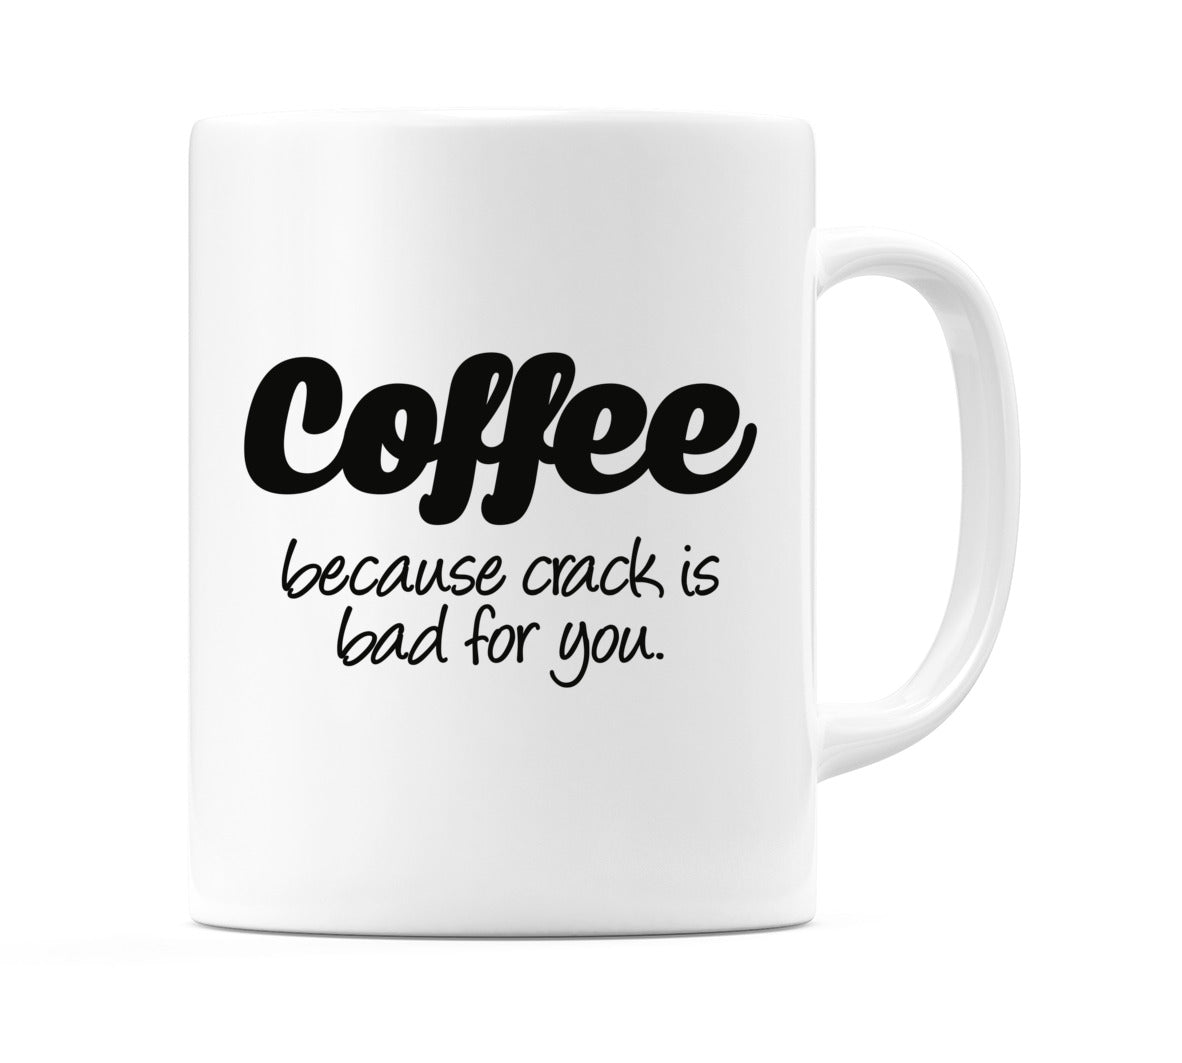 Coffee because crack is bad for you. Mug